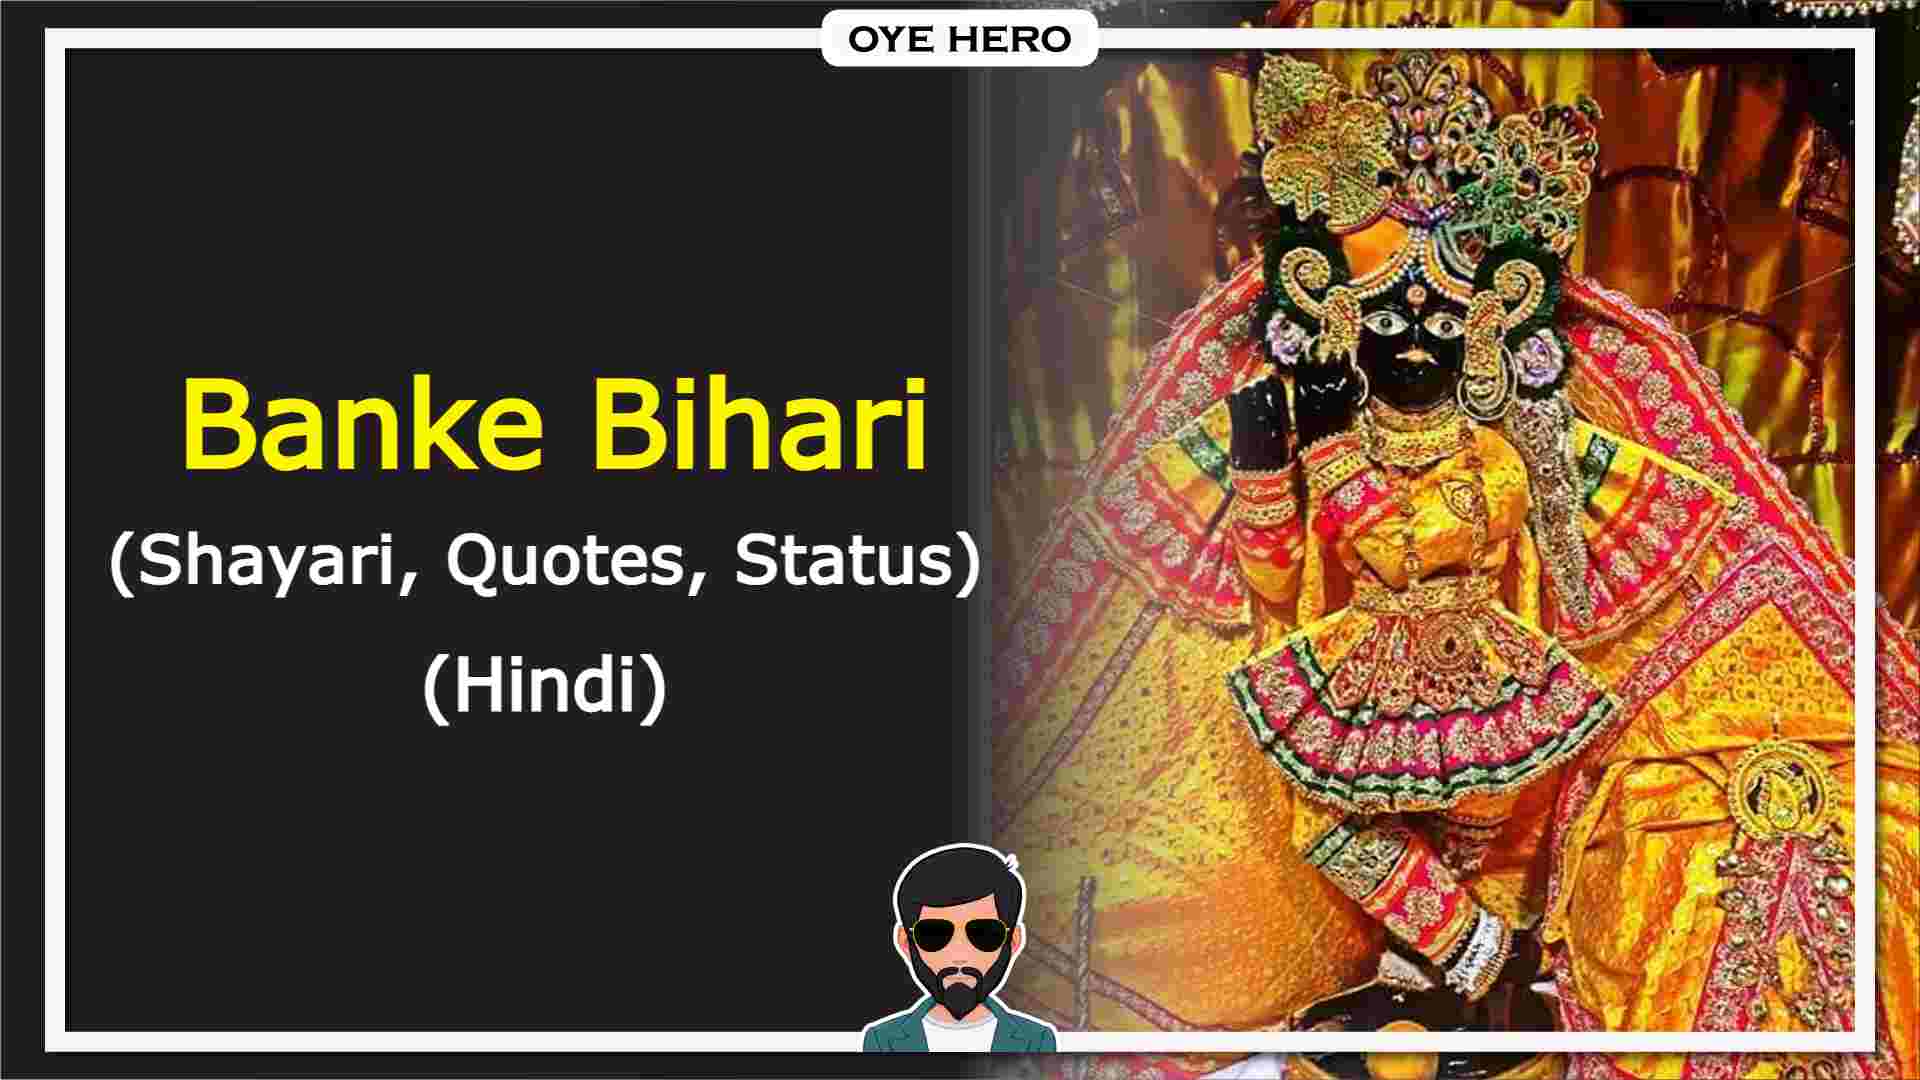 You are currently viewing 30+ श्री बांके बिहारी शायरी स्टेटस Images | Banke Bihari Shayari Quotes Status Images in Hindi